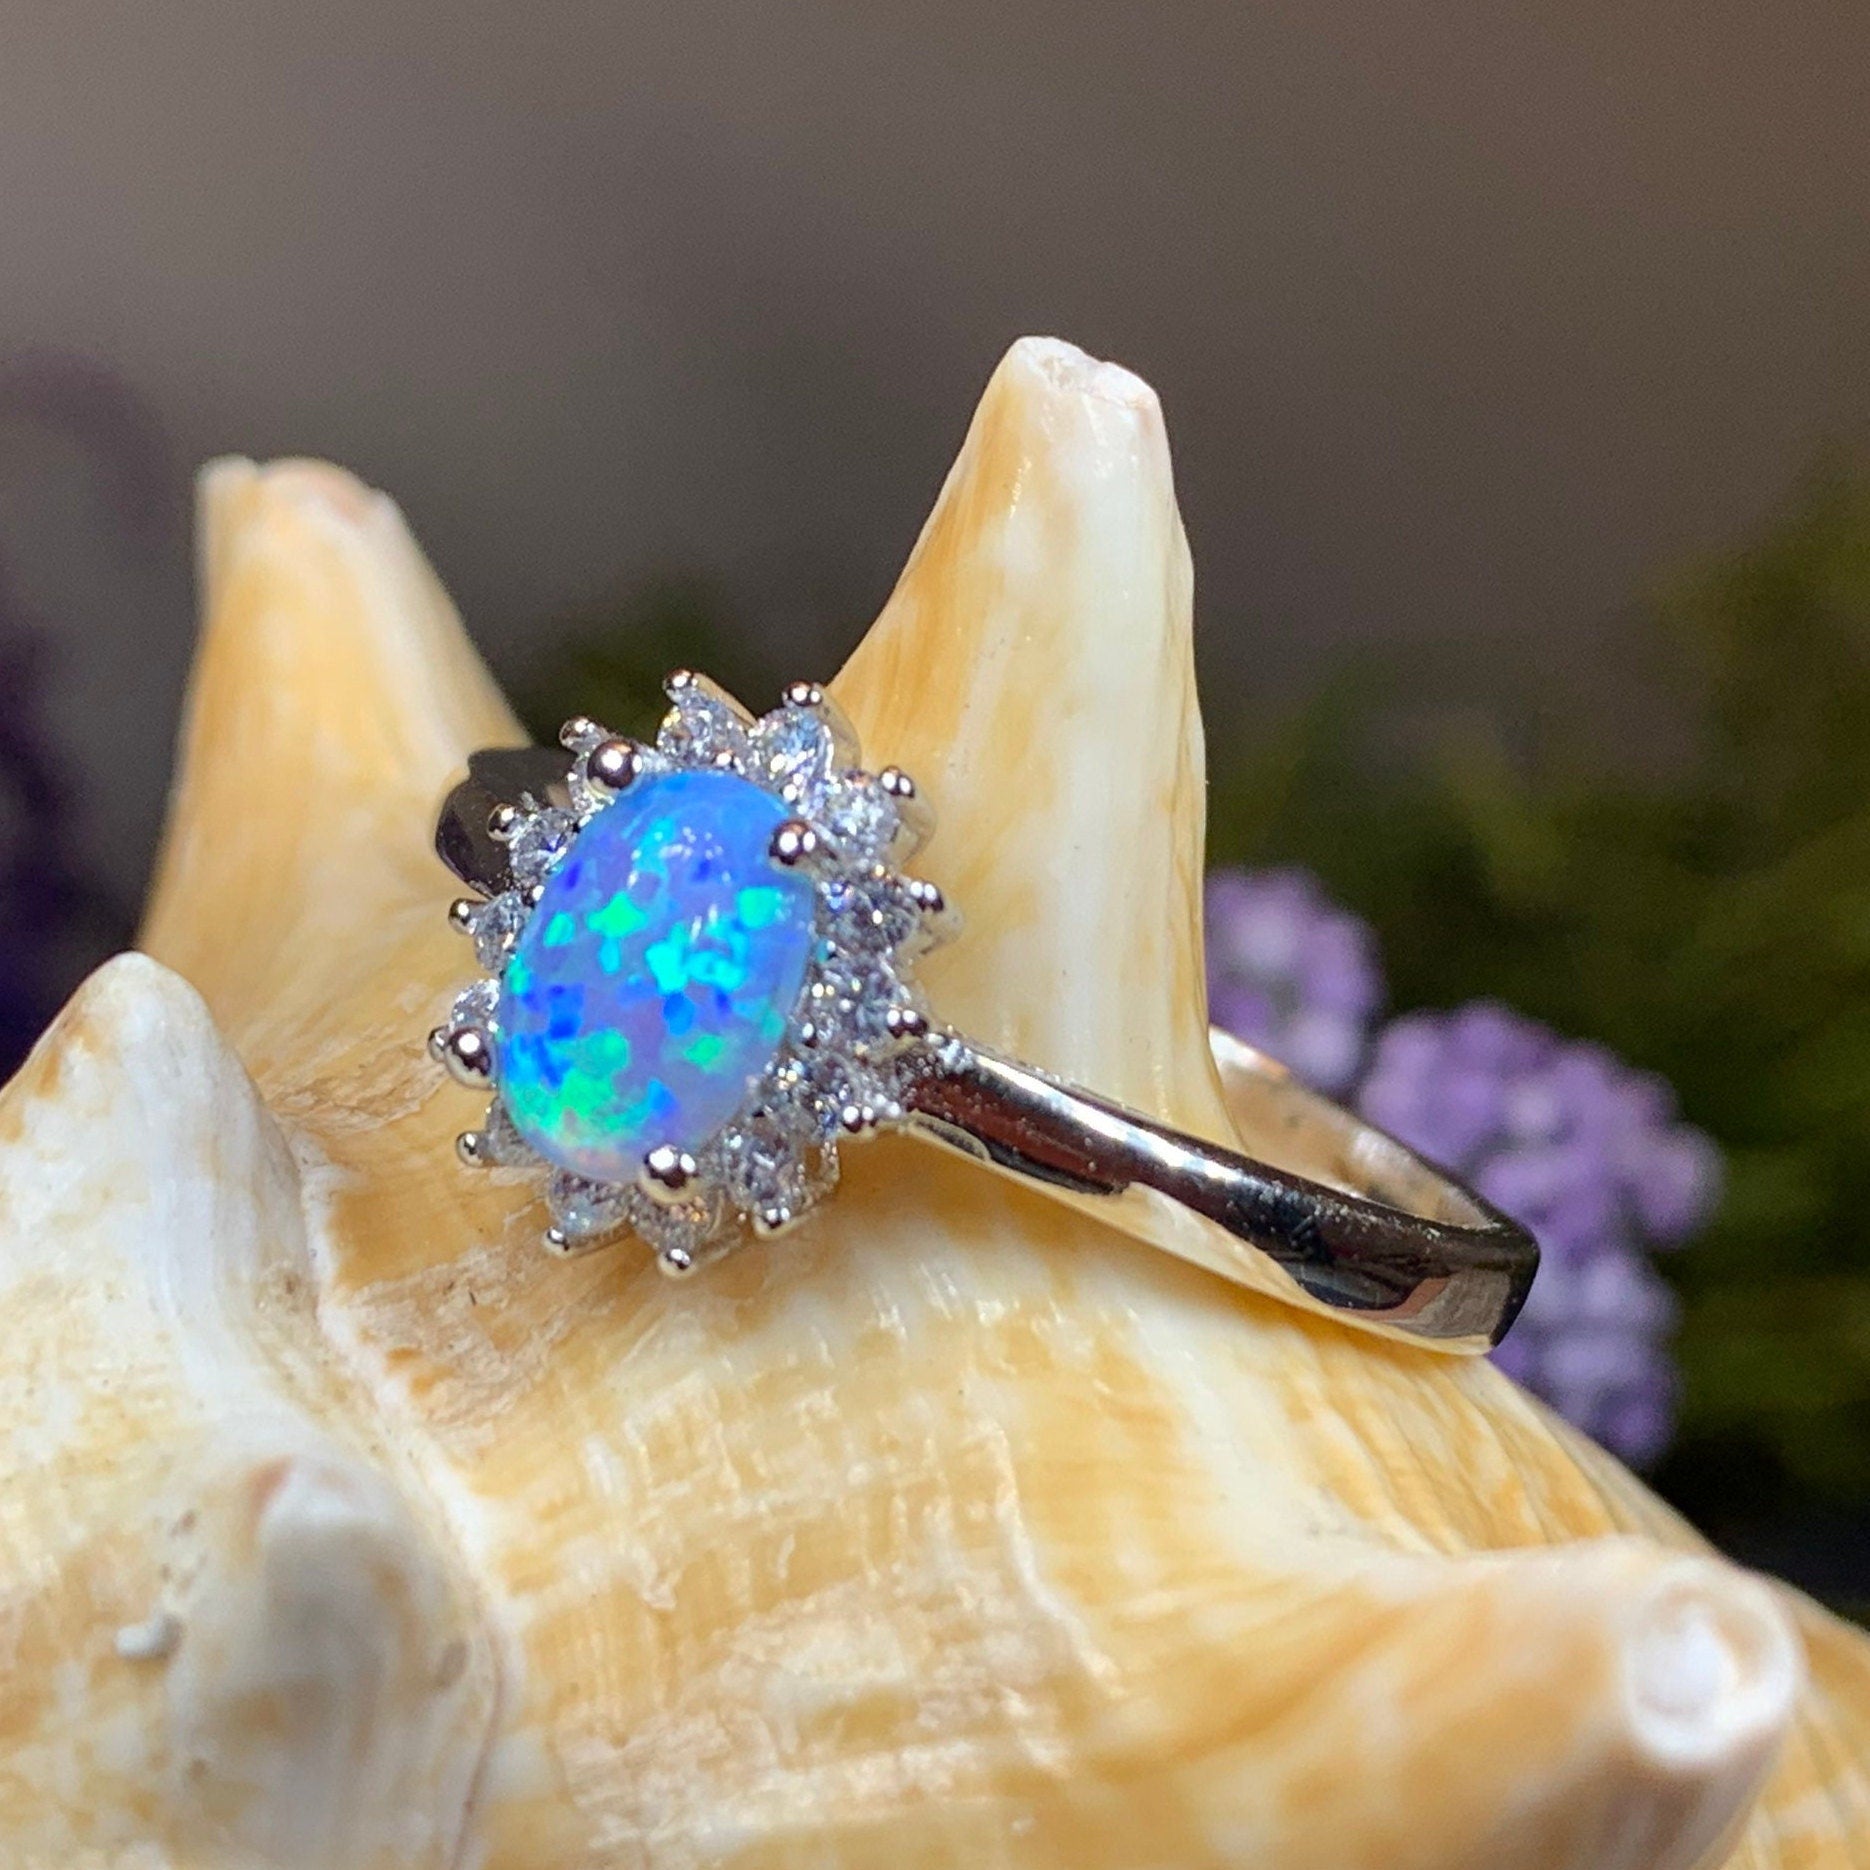 blue fire opal meaning